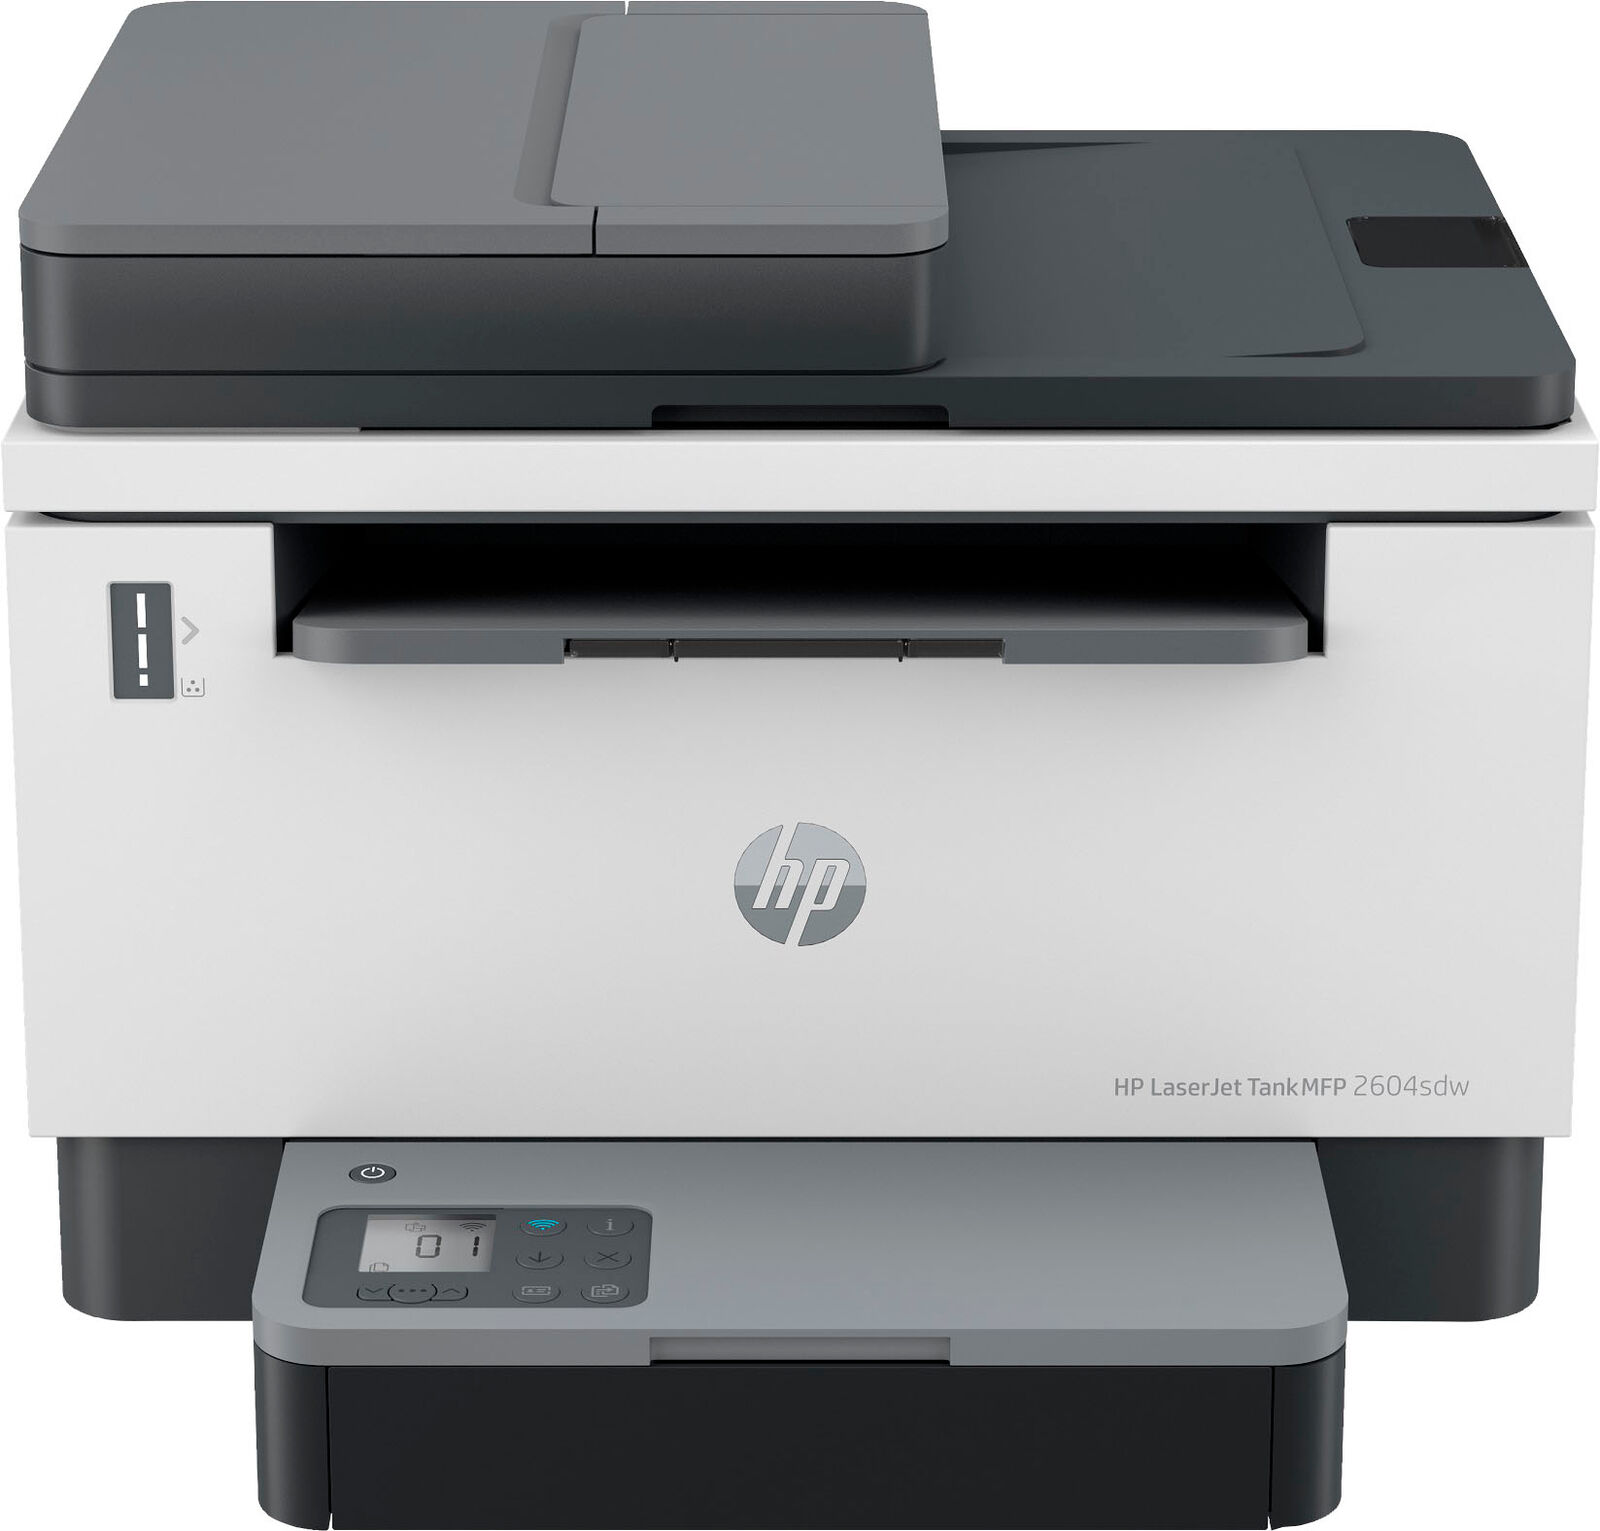 HP - LaserJet Tank 2604sdw Wireless Black-and-White All-In-One Laser Printer ...